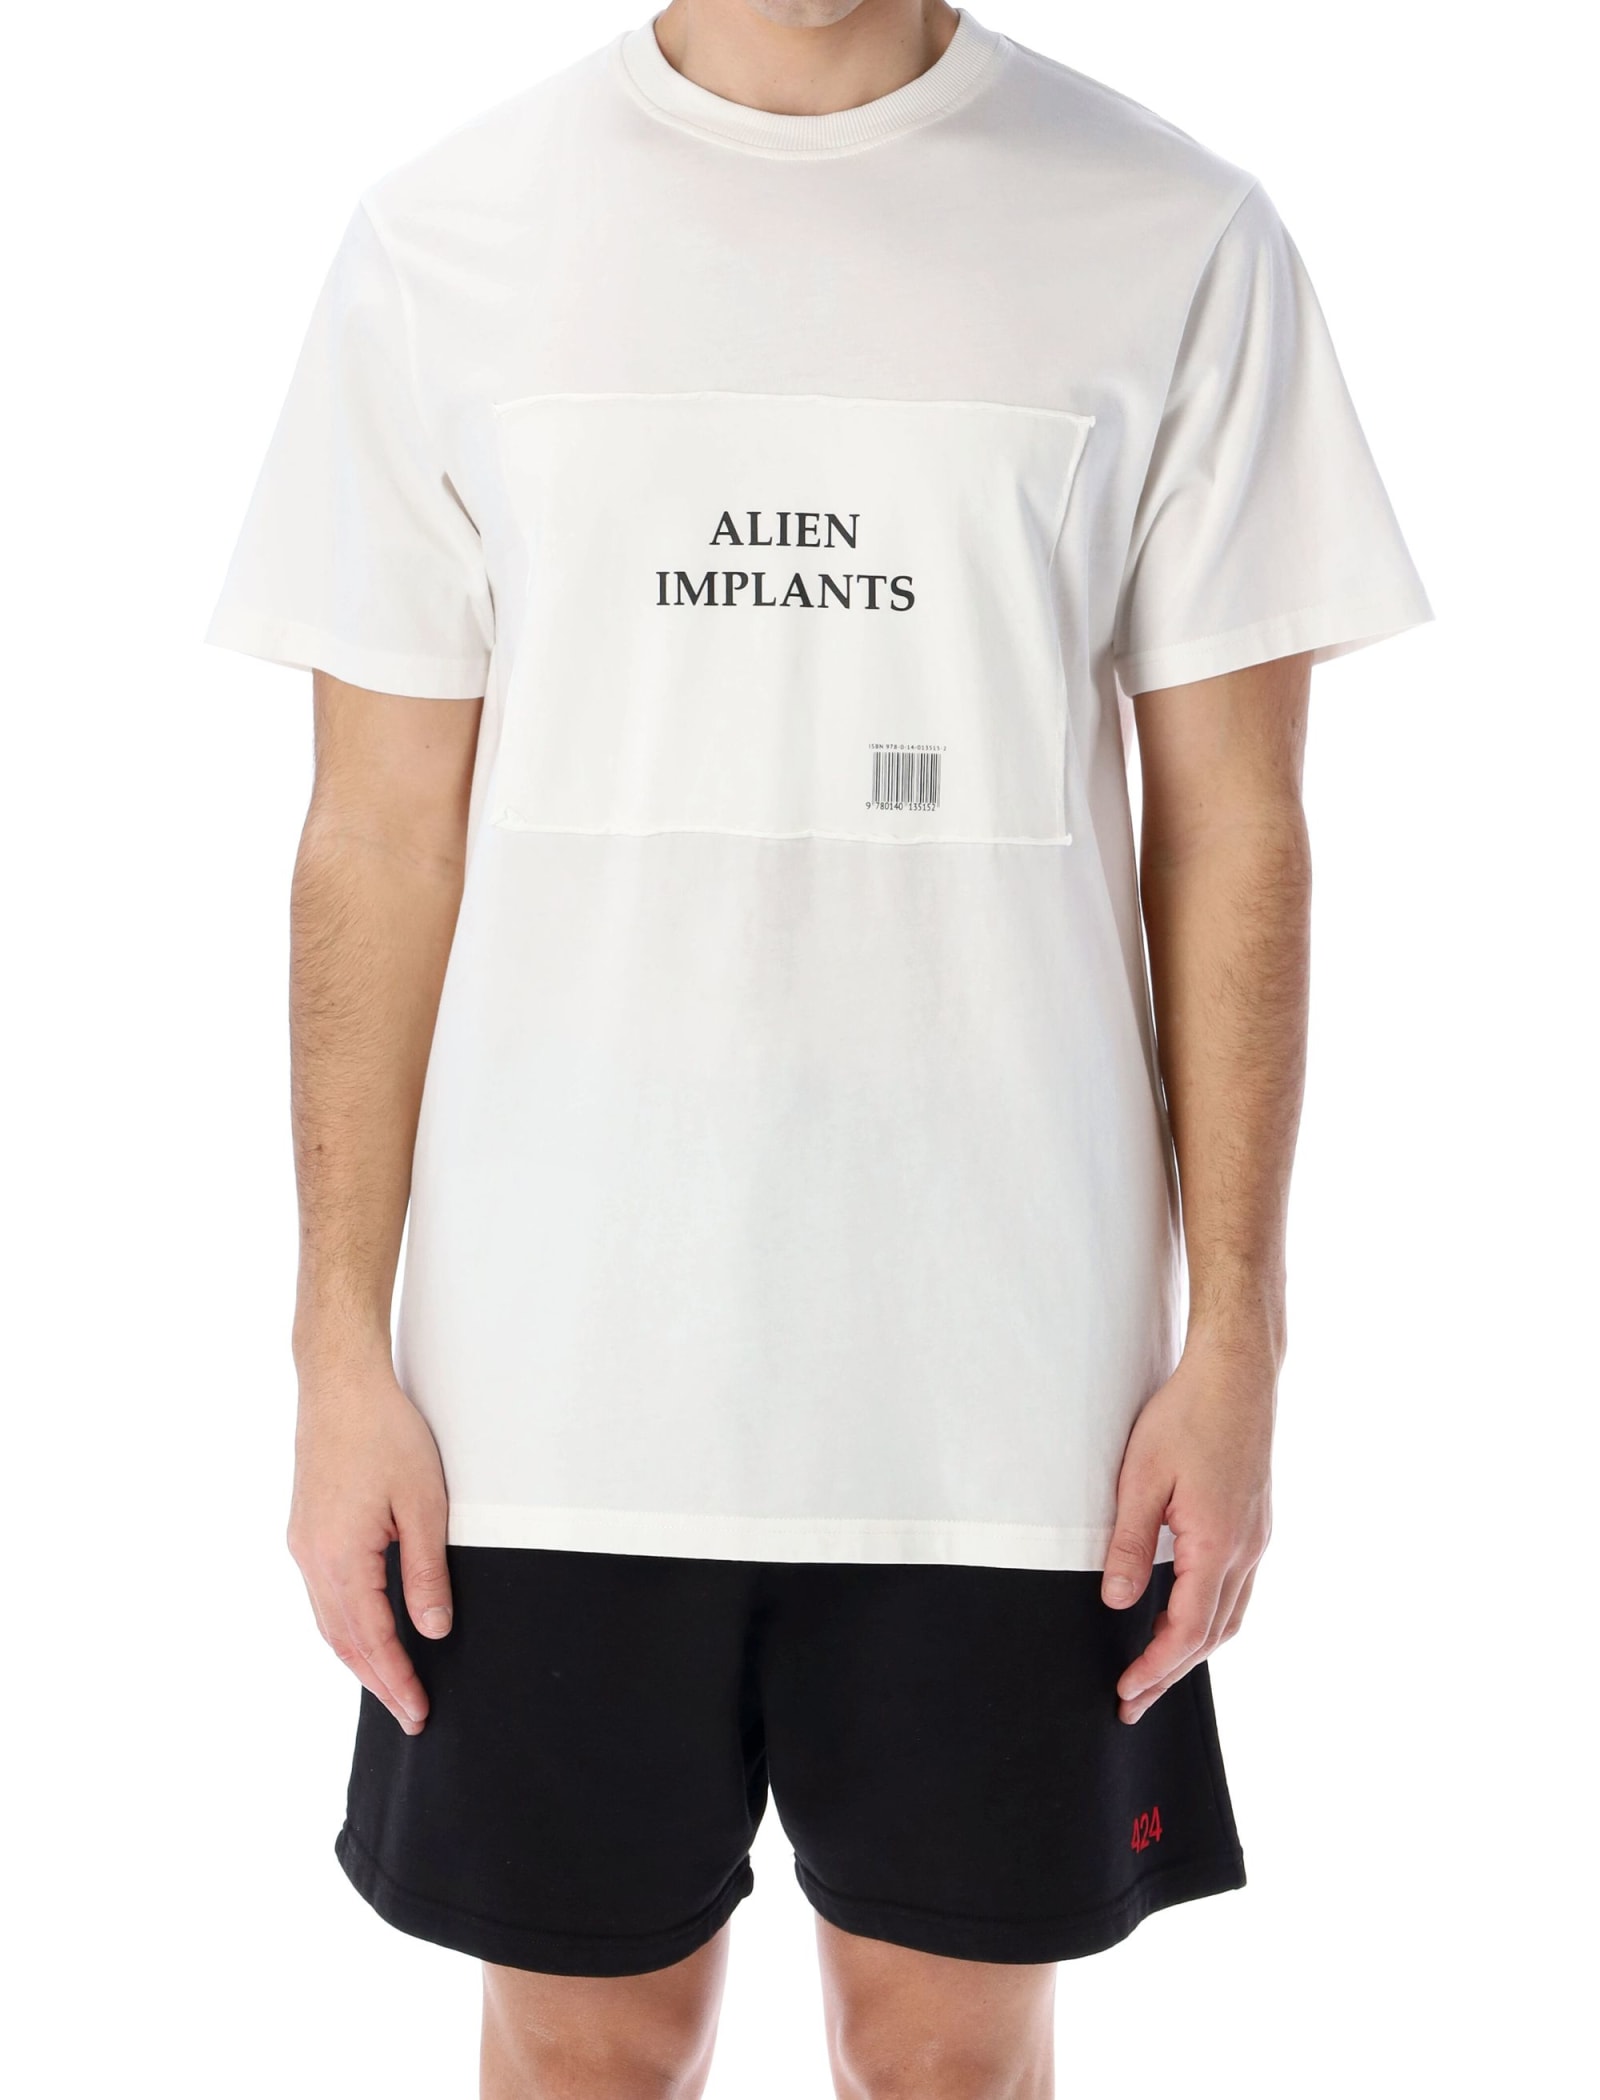 FourTwoFour on Fairfax Alien Implants T-shirt